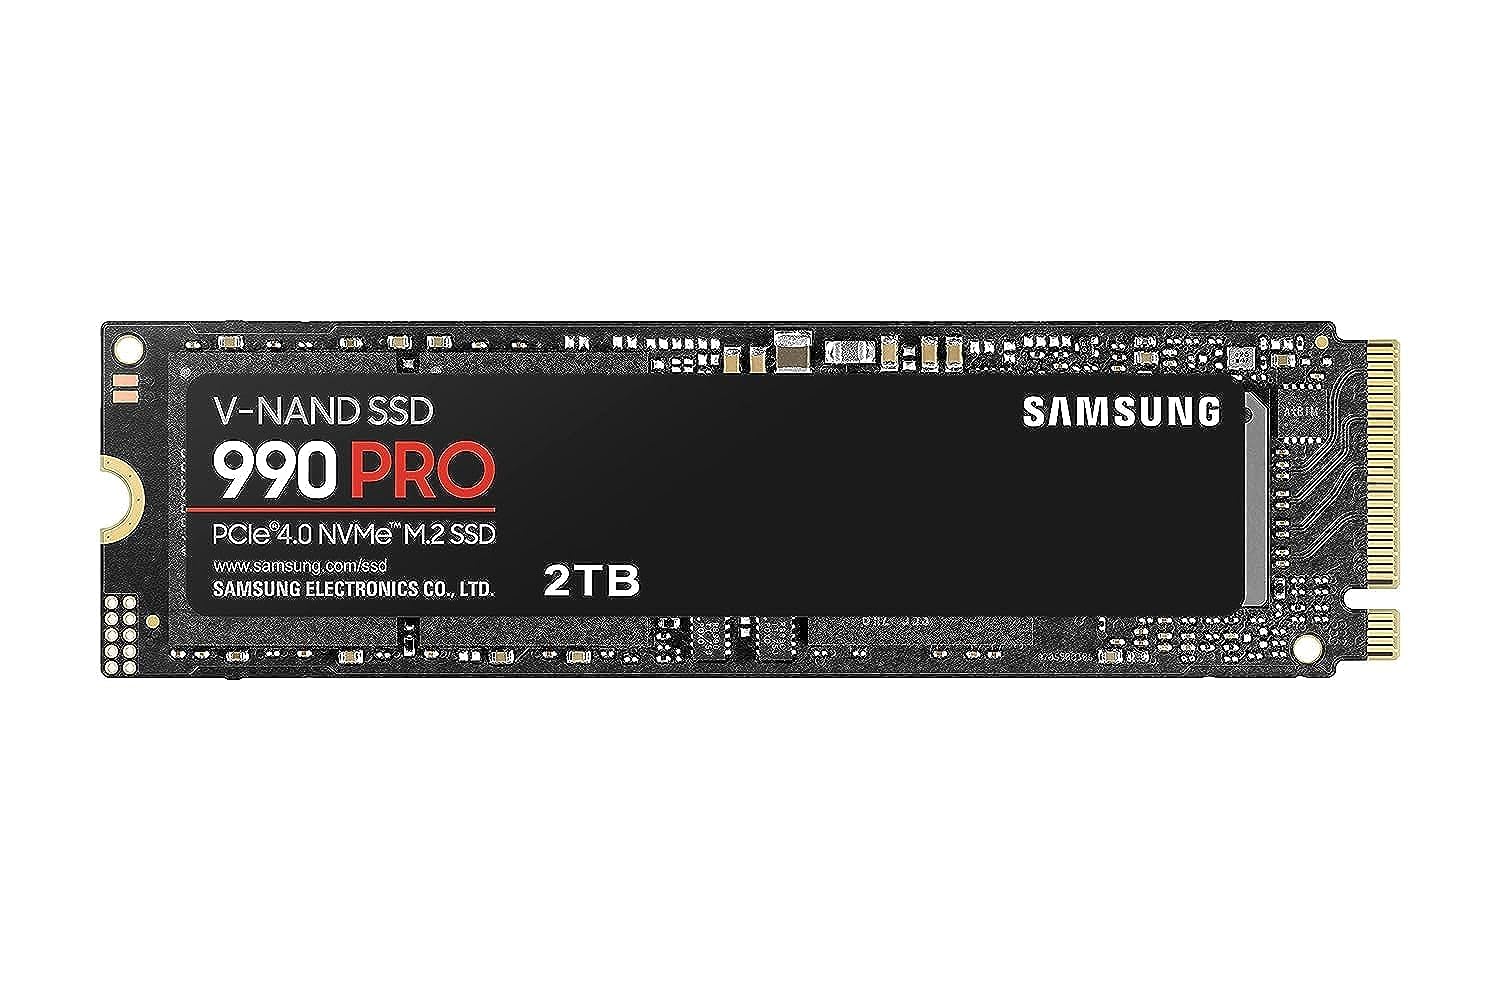 2TB Samsung 990 PRO PCle Gen 4x4 NVMe M.2 Internal SSD $128.50